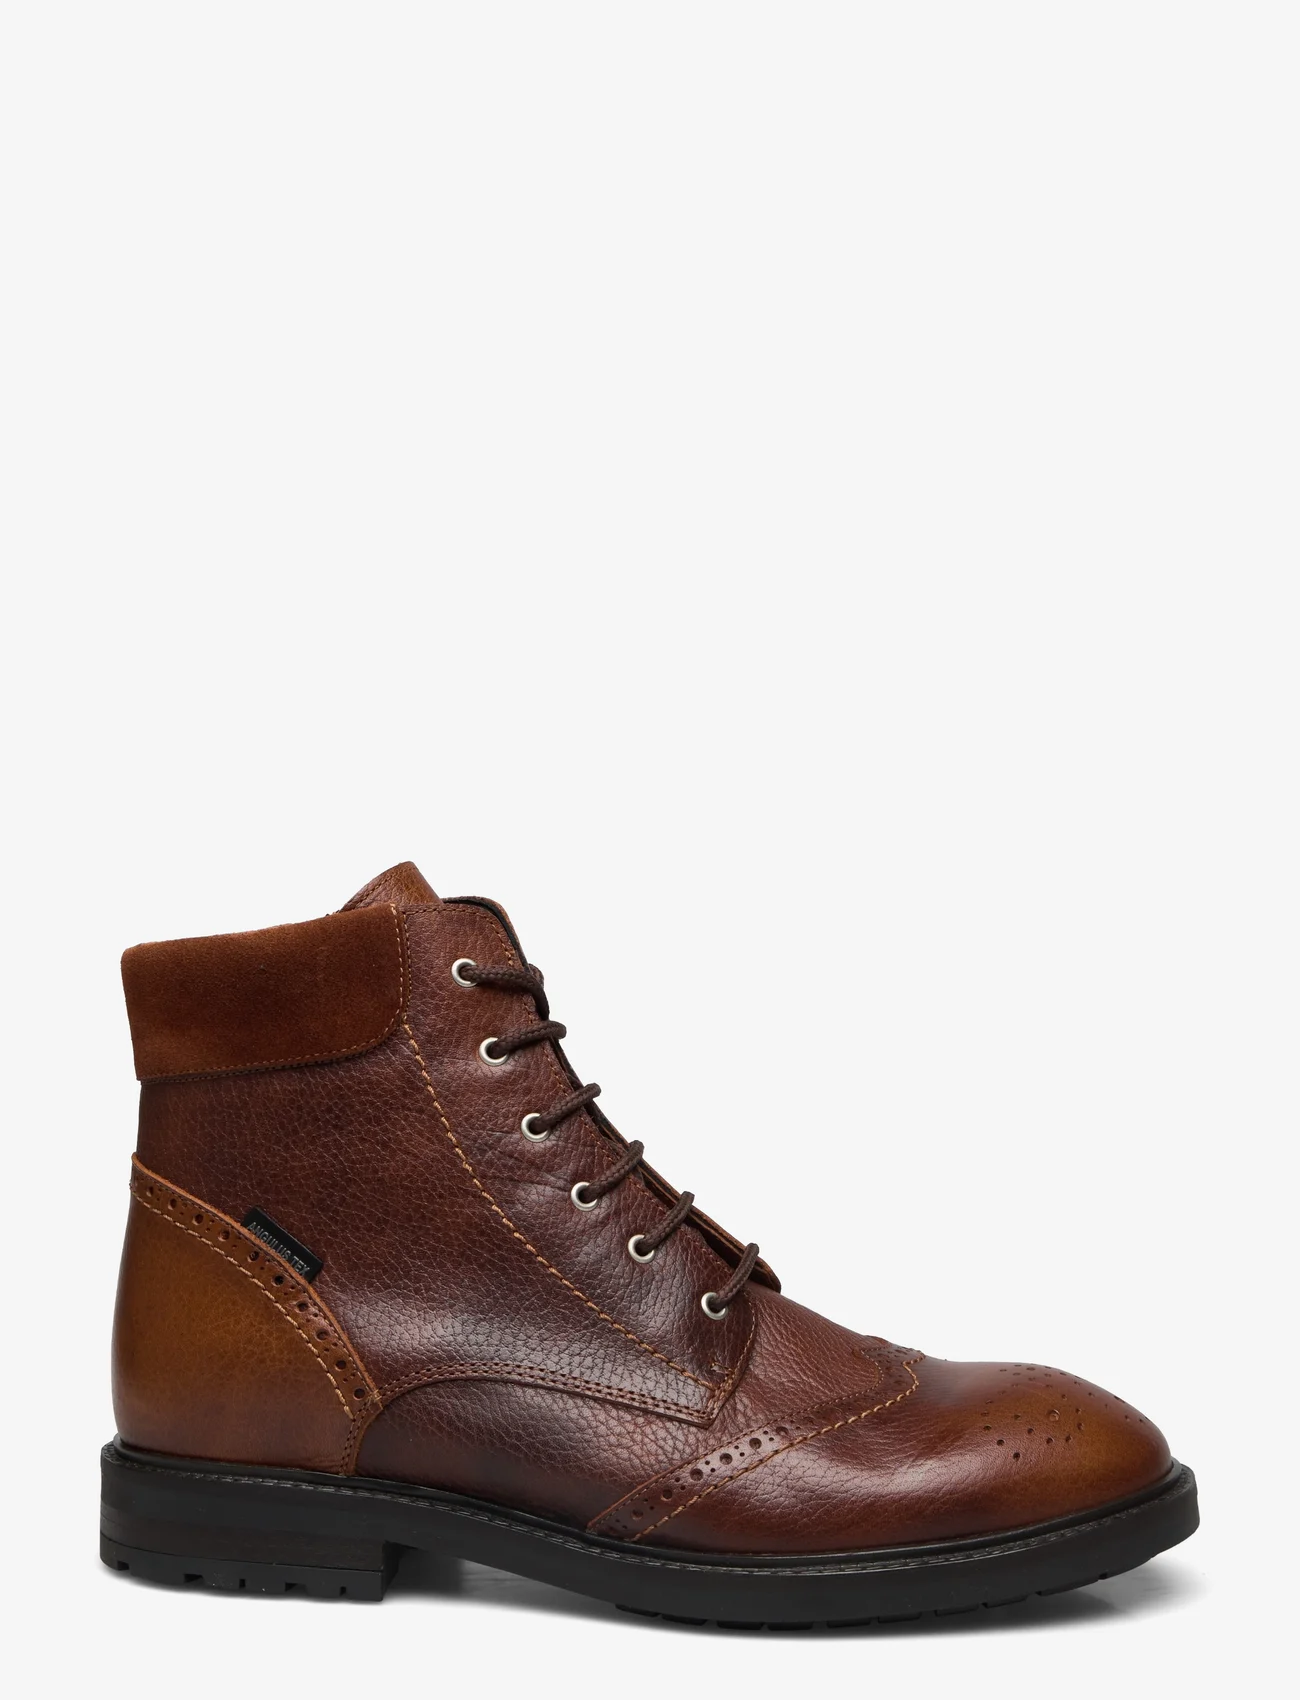 ANGULUS - Shoes - flat - with lace - støvler med snøre - 2509/1166 medium brown/cognac - 1